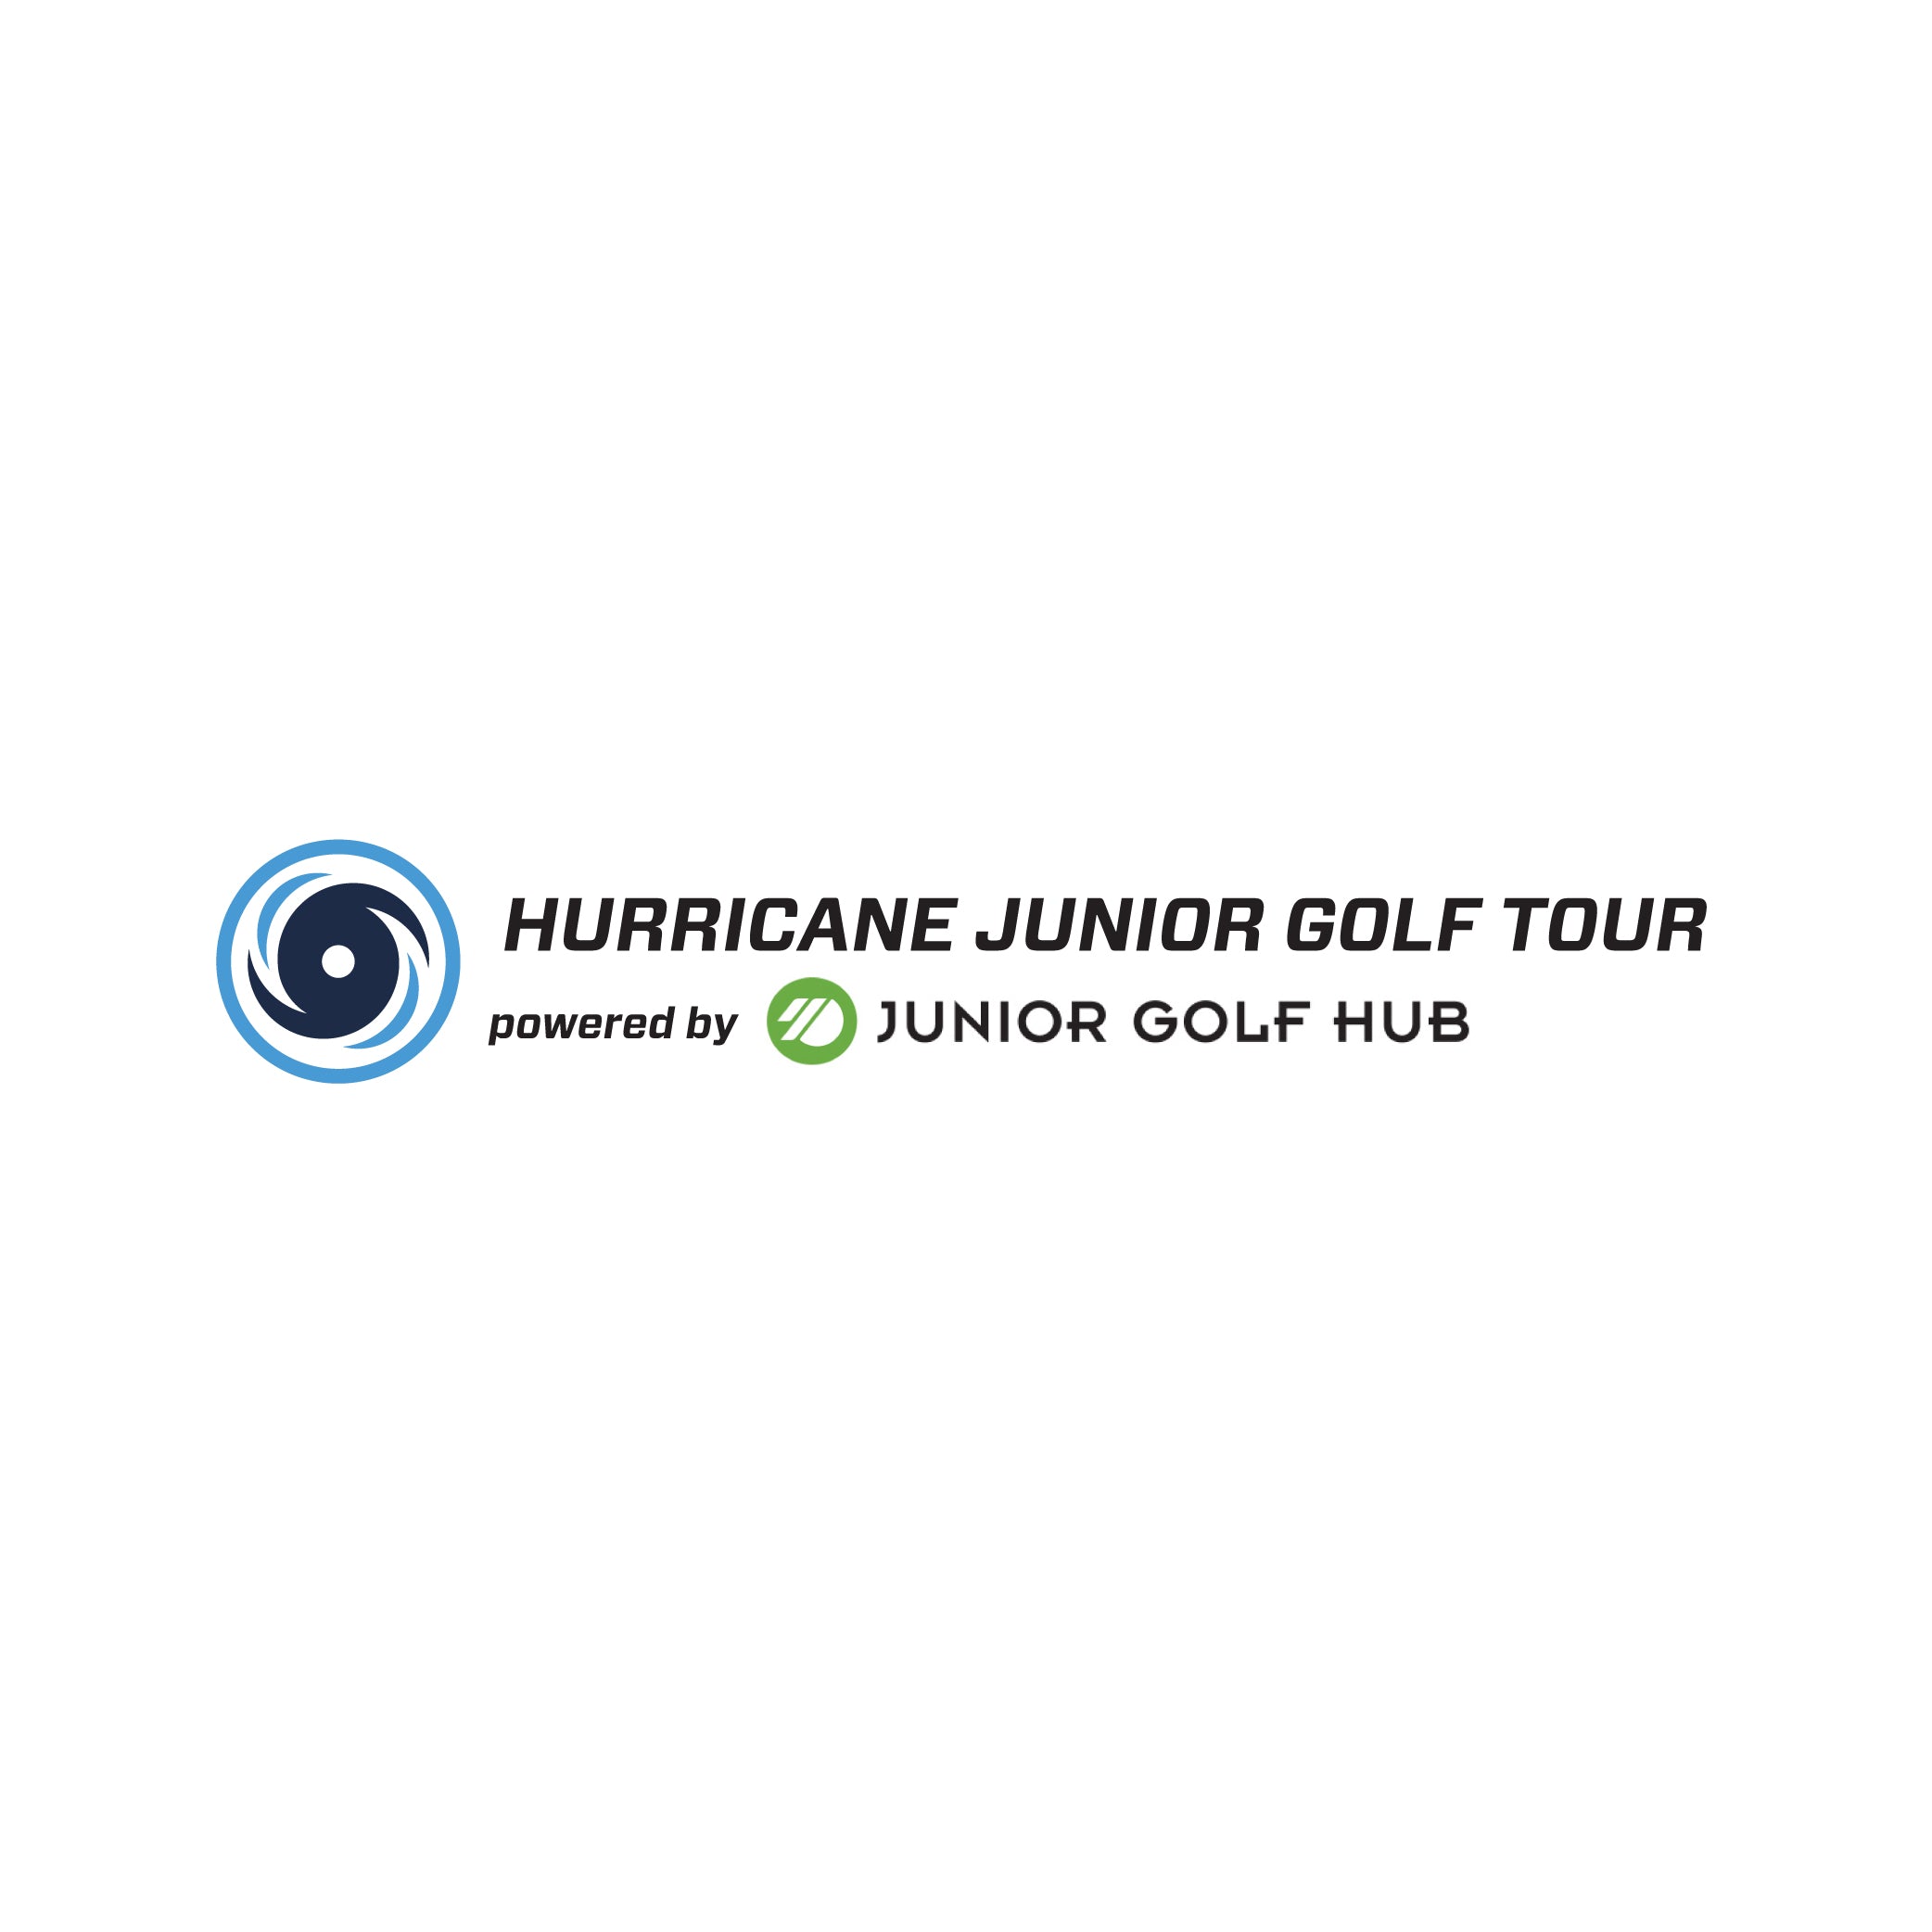 Hurricane Junior Golf Tour Partners with Bag Boy